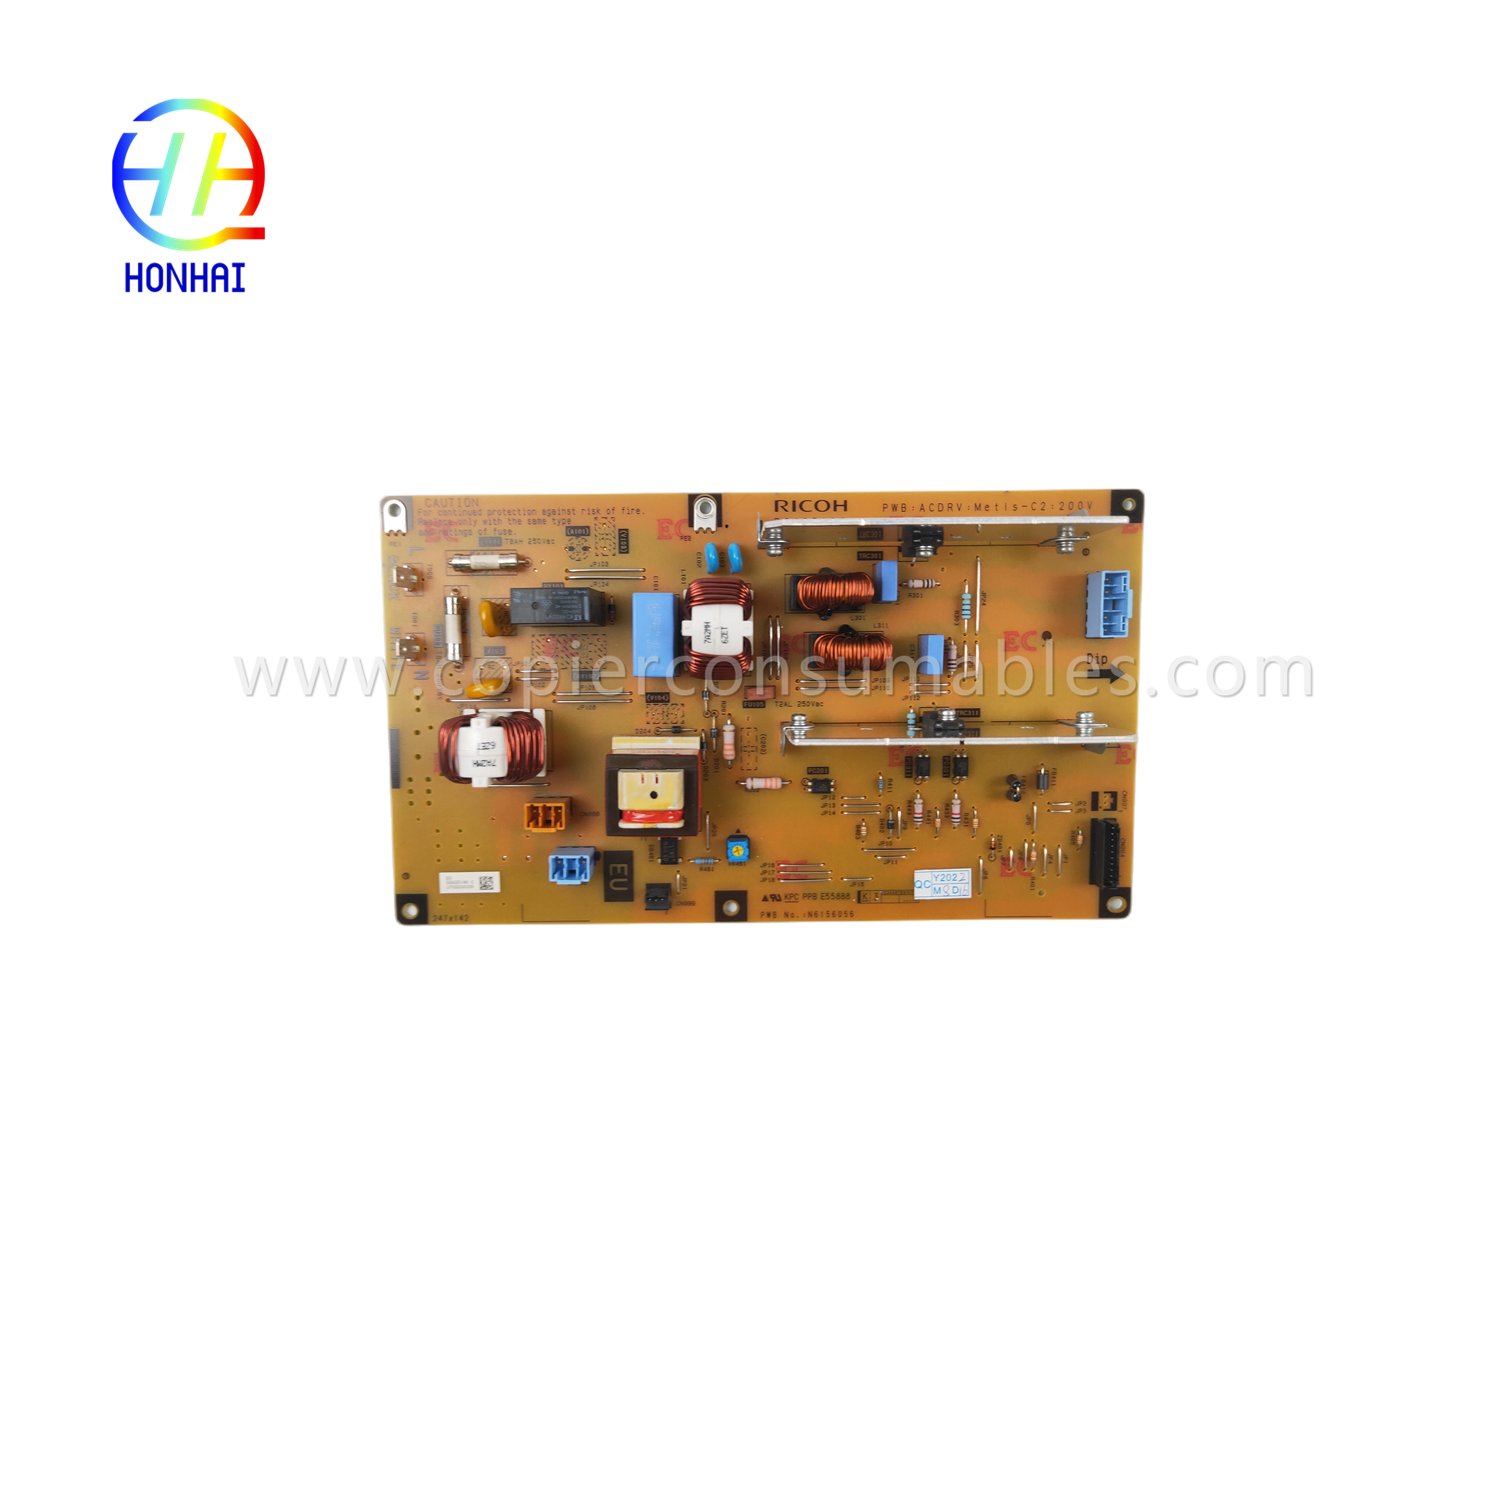 AC Controller Board fir Ricoh Aficio mpc4504 mpc5504 mpc6004 D242-5186 OEM Control Board